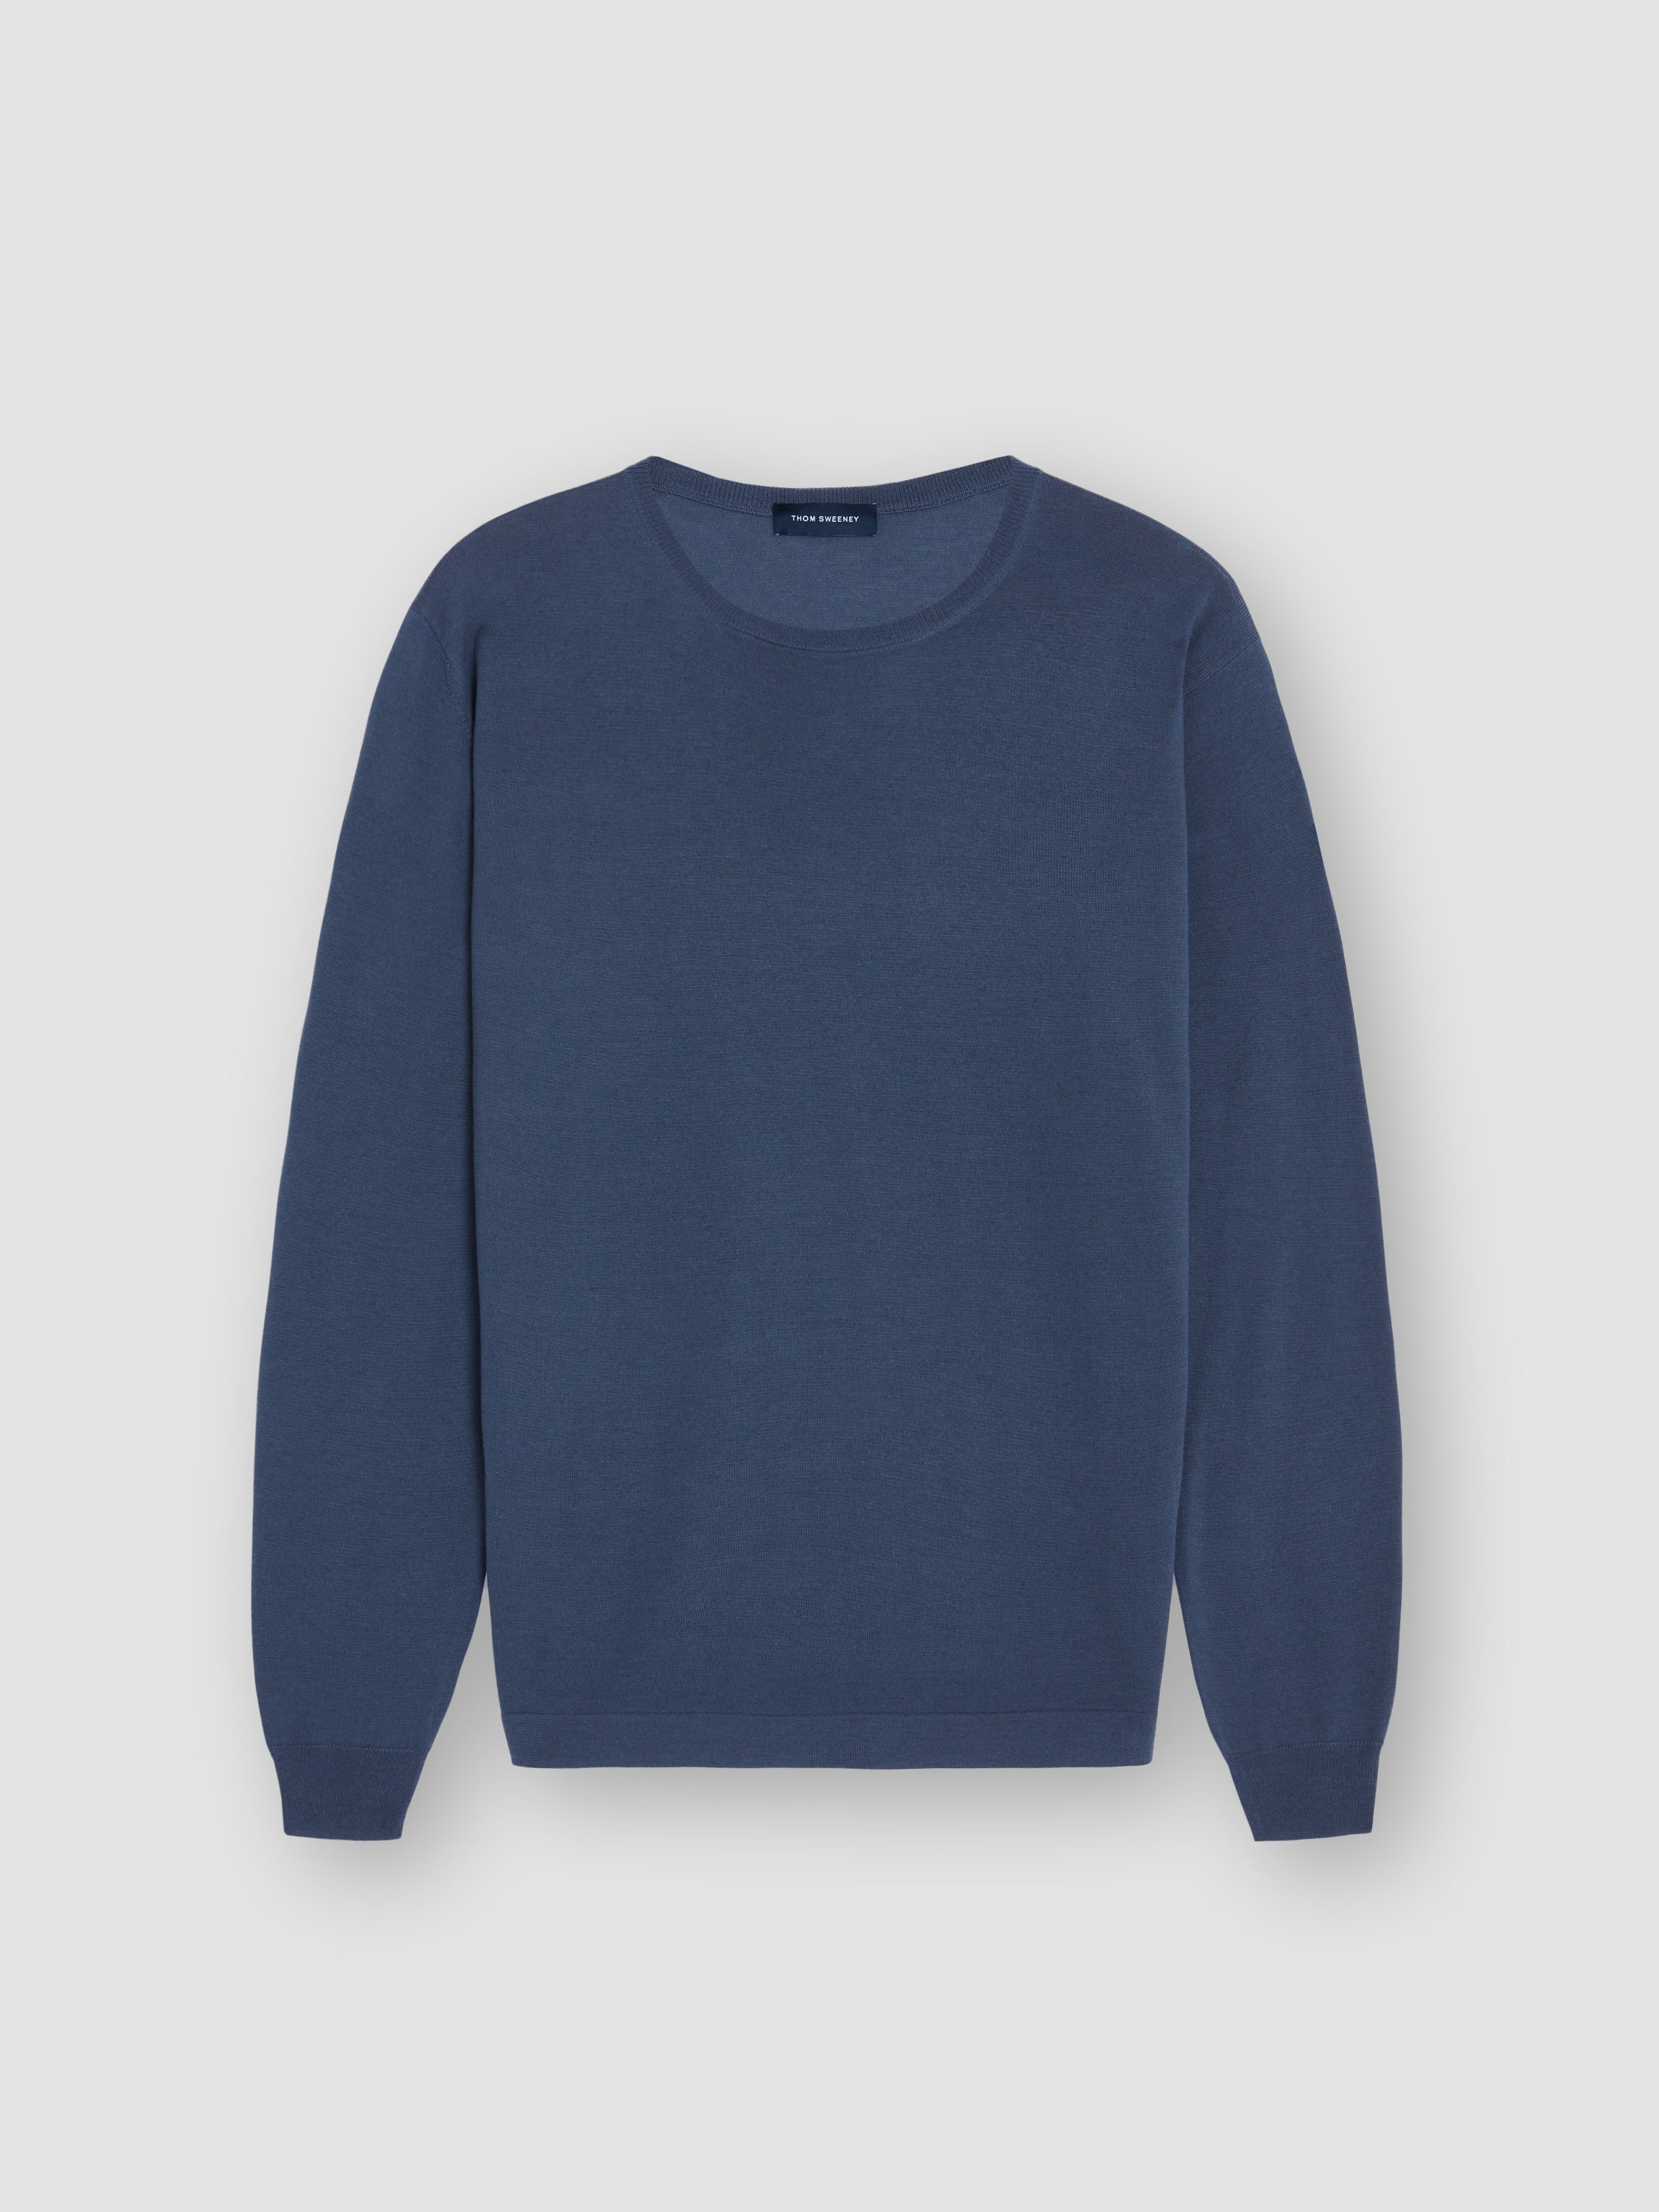 Merino Wool Extrafine Crew Neck Sweater Slate Blue Product Image